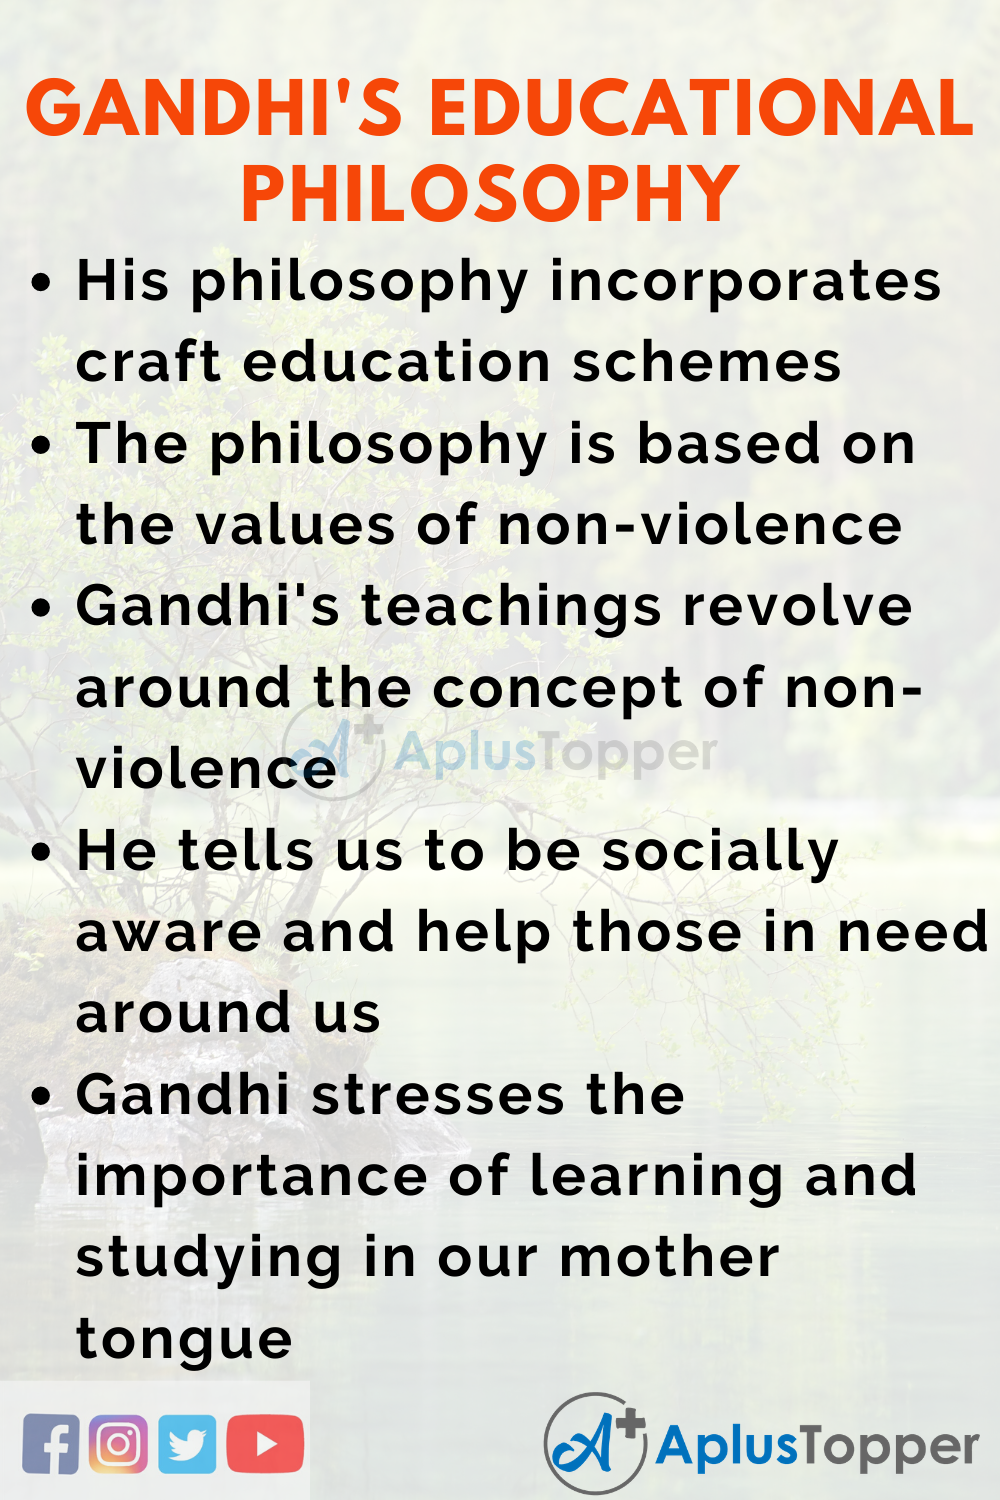 education essay on mahatma gandhi